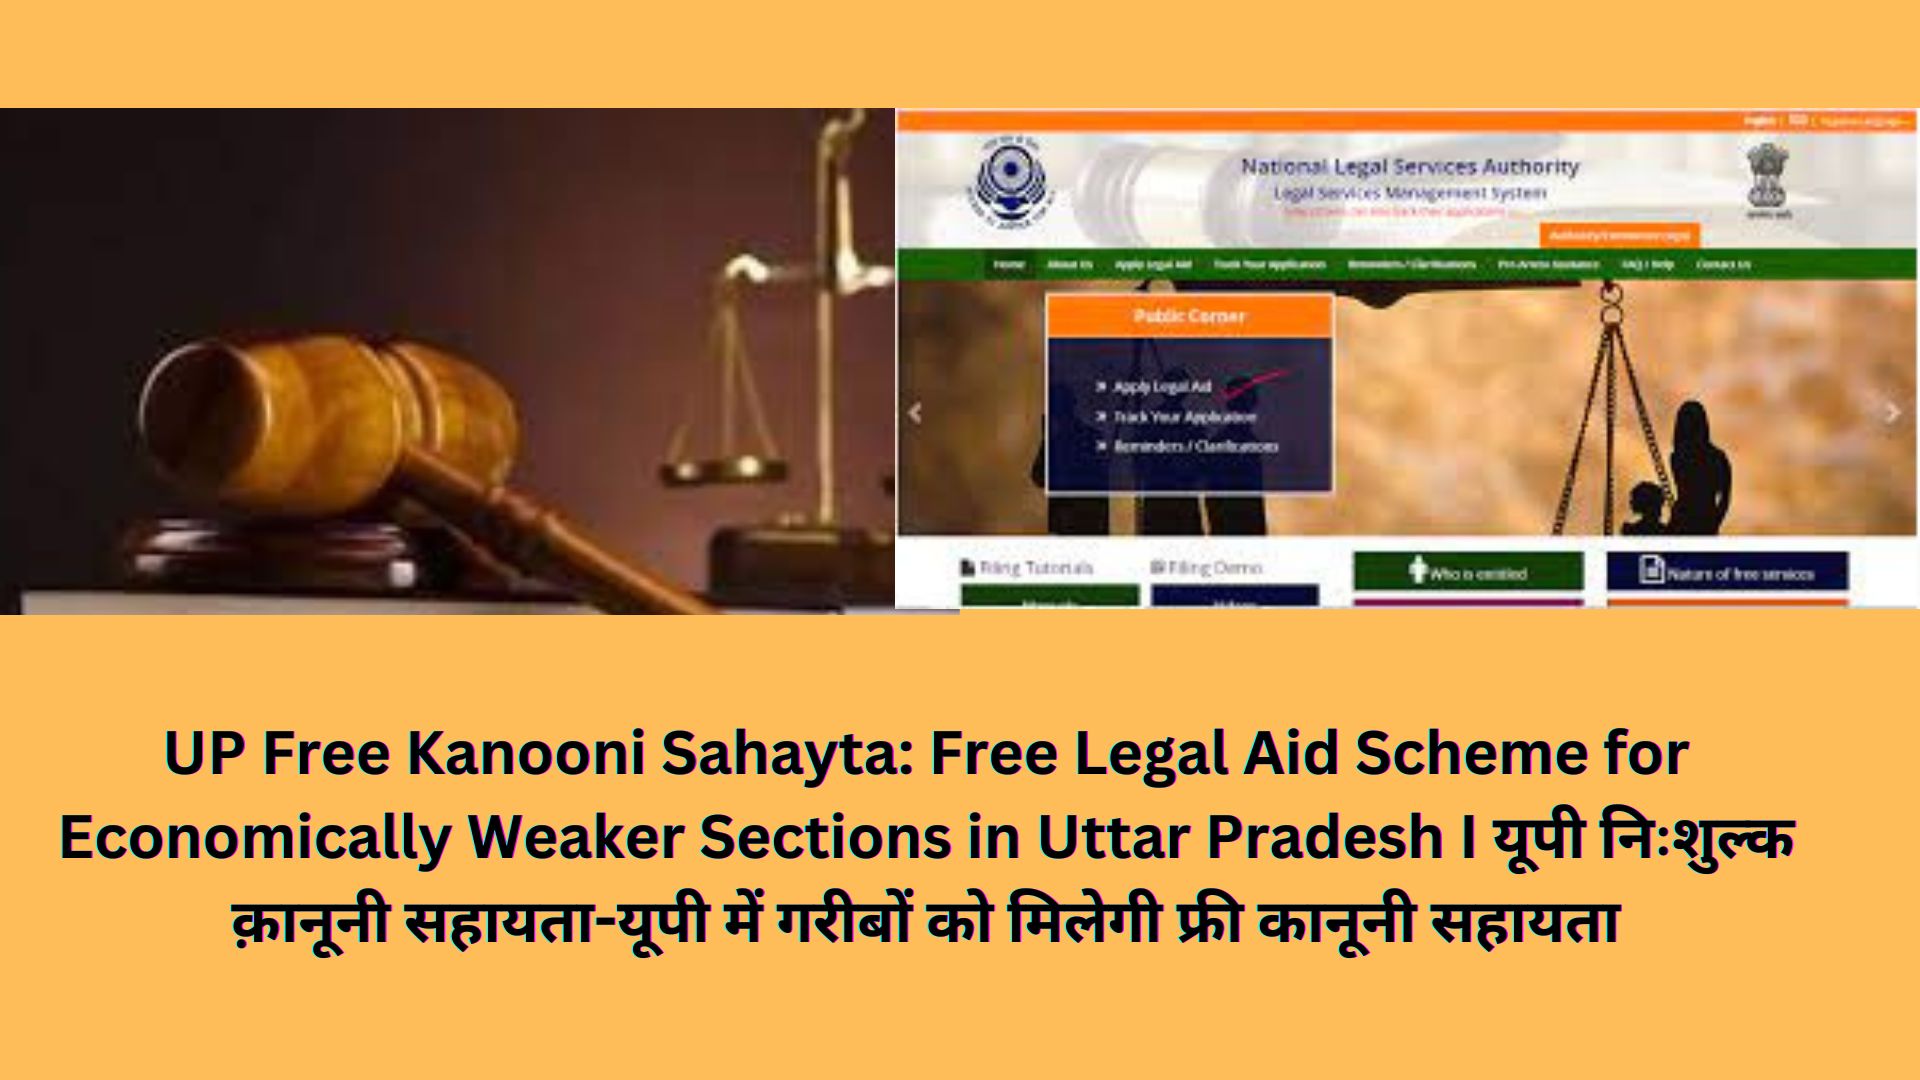 UP Free Kanooni Sahayta: Free Legal Aid Scheme for Economically Weaker Sections in Uttar Pradesh I यूपी निःशुल्क क़ानूनी सहायता-यूपी में गरीबों को मिलेगी फ्री कानूनी सहायता